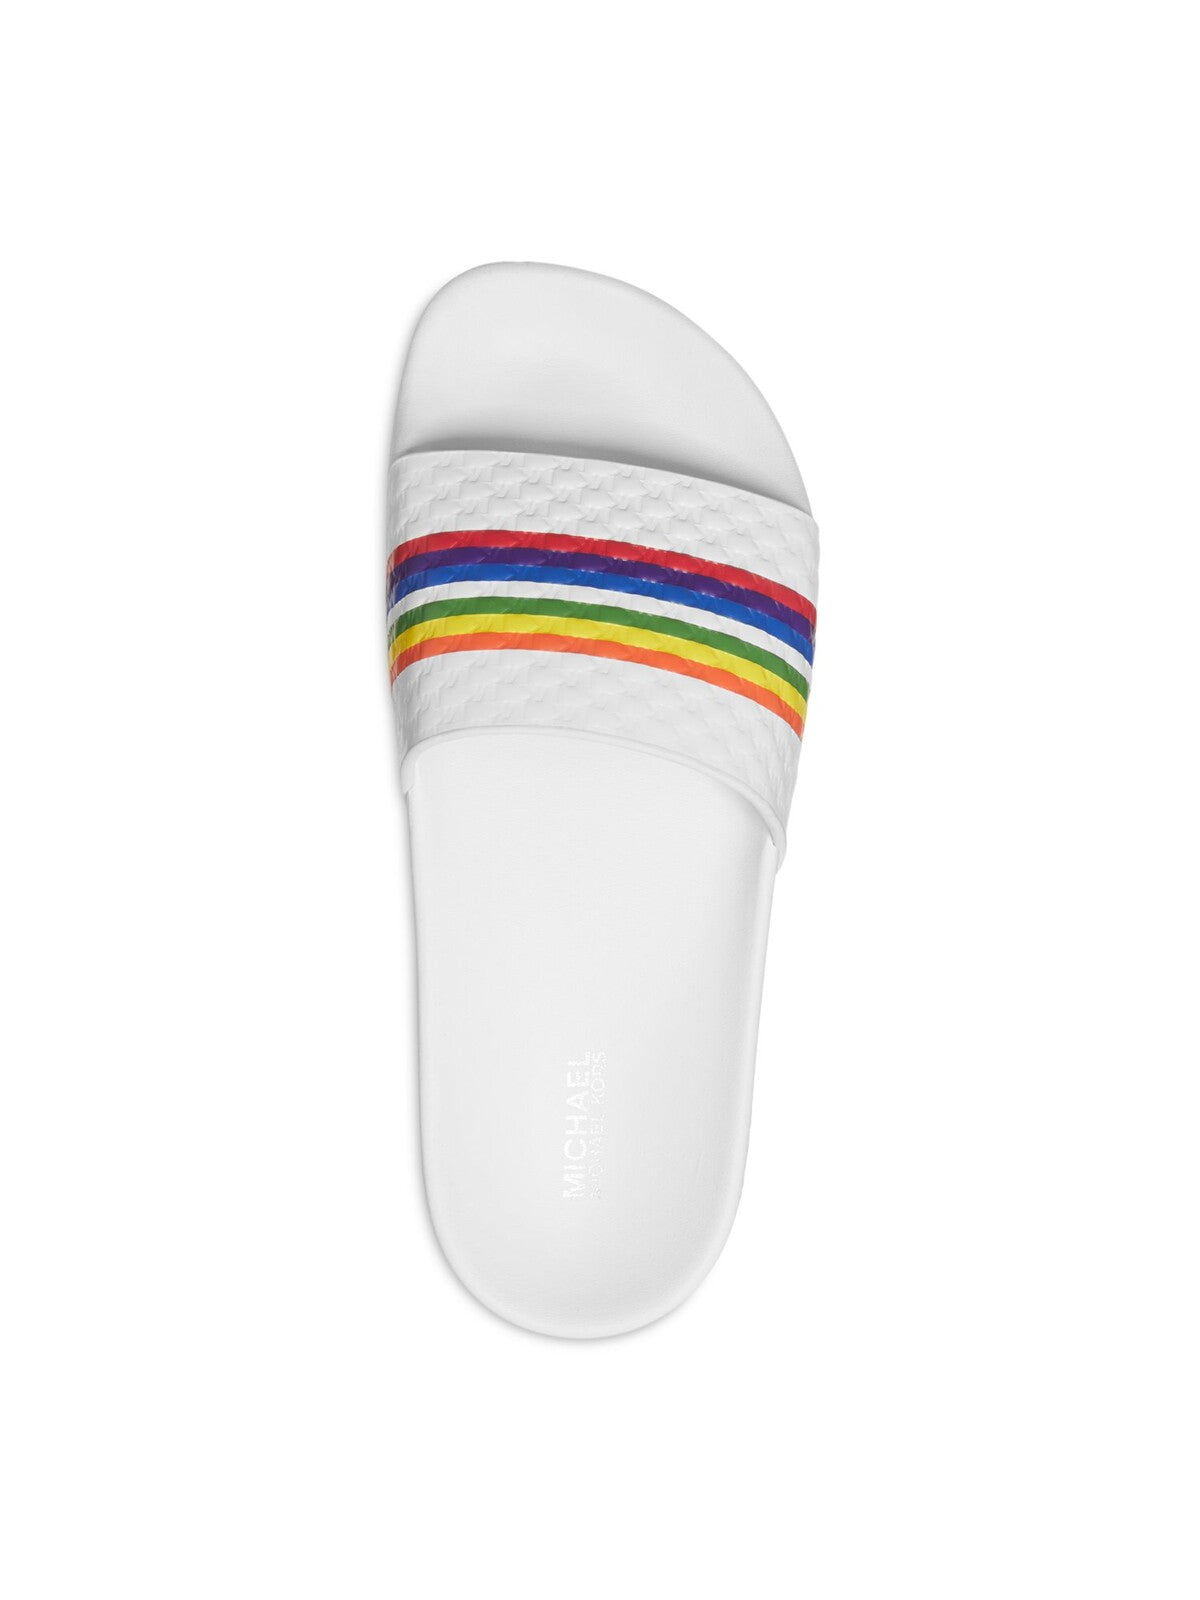 MICHAEL KORS Womens White Striped Logo Gilmore Round Toe Platform Slip On Leather Slide Sandals 8 M